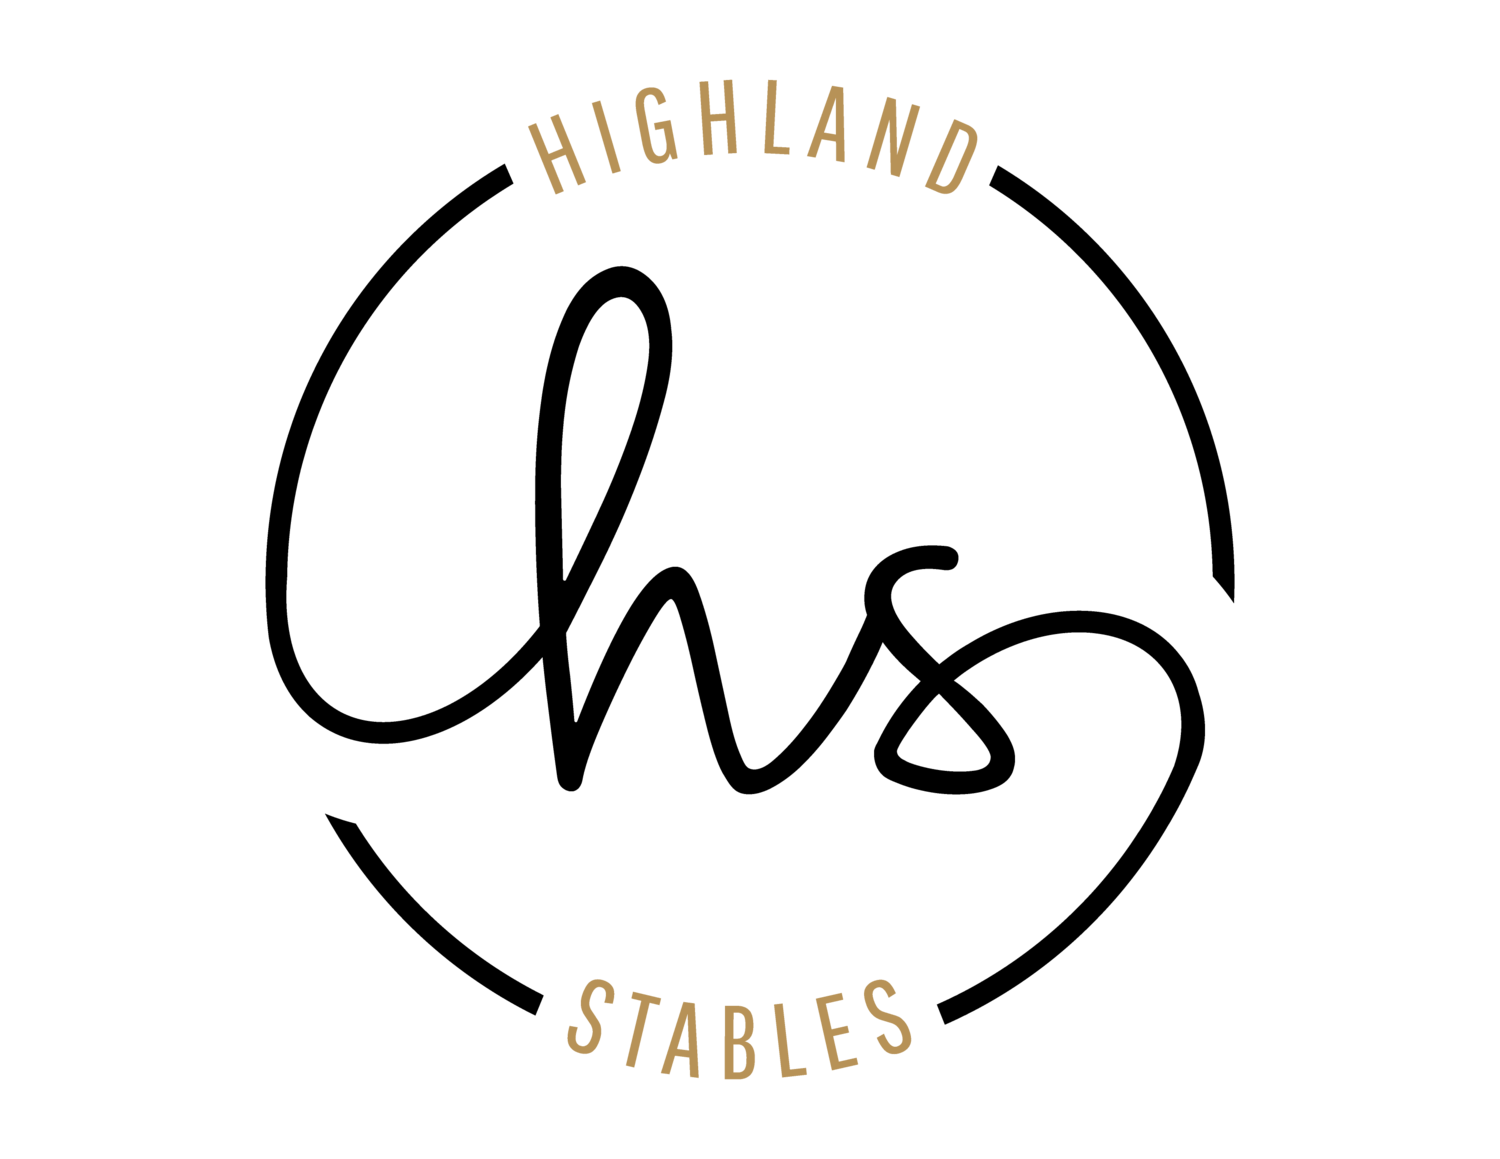 Highland Stables